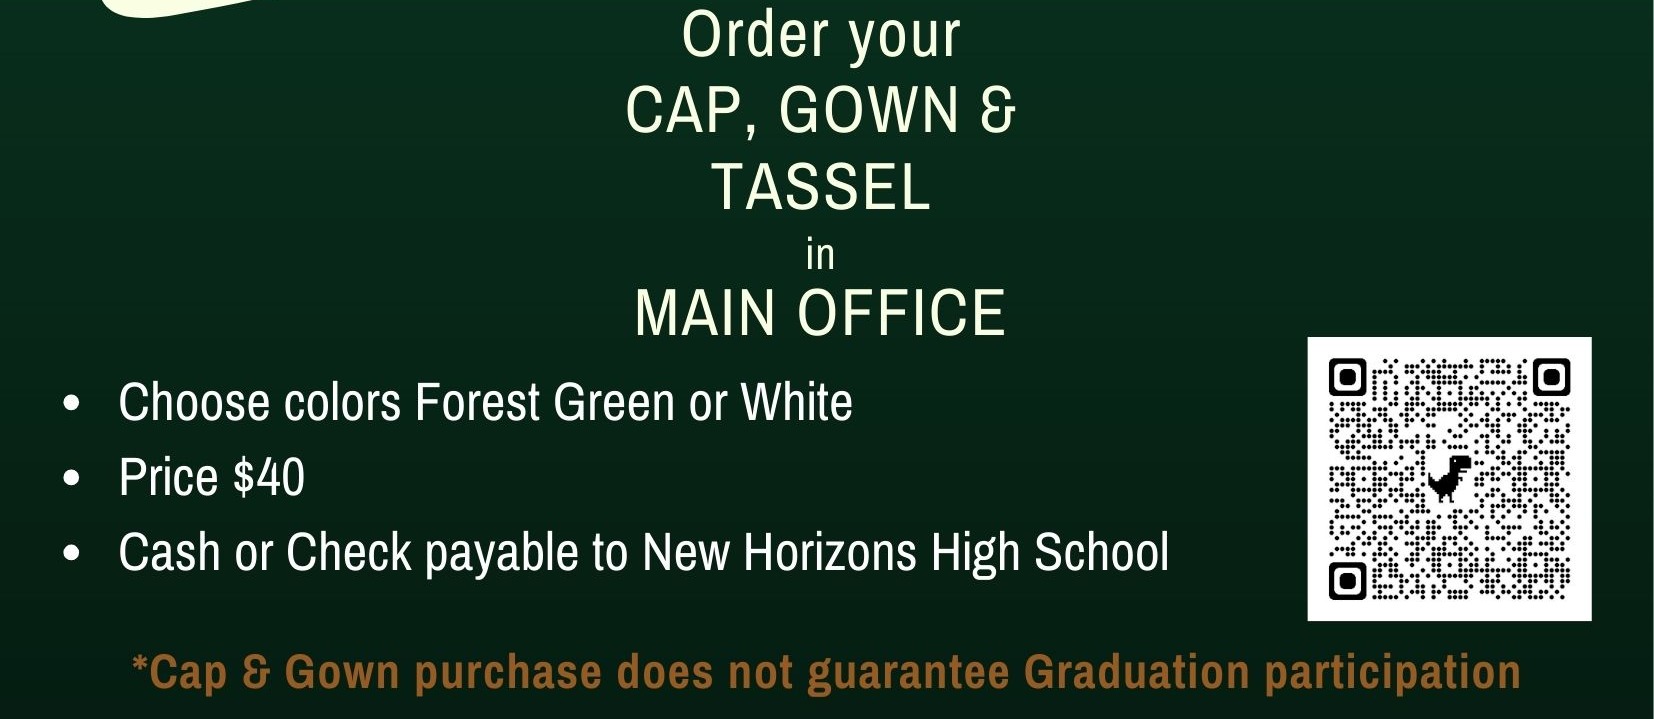 Cap & Gown Order